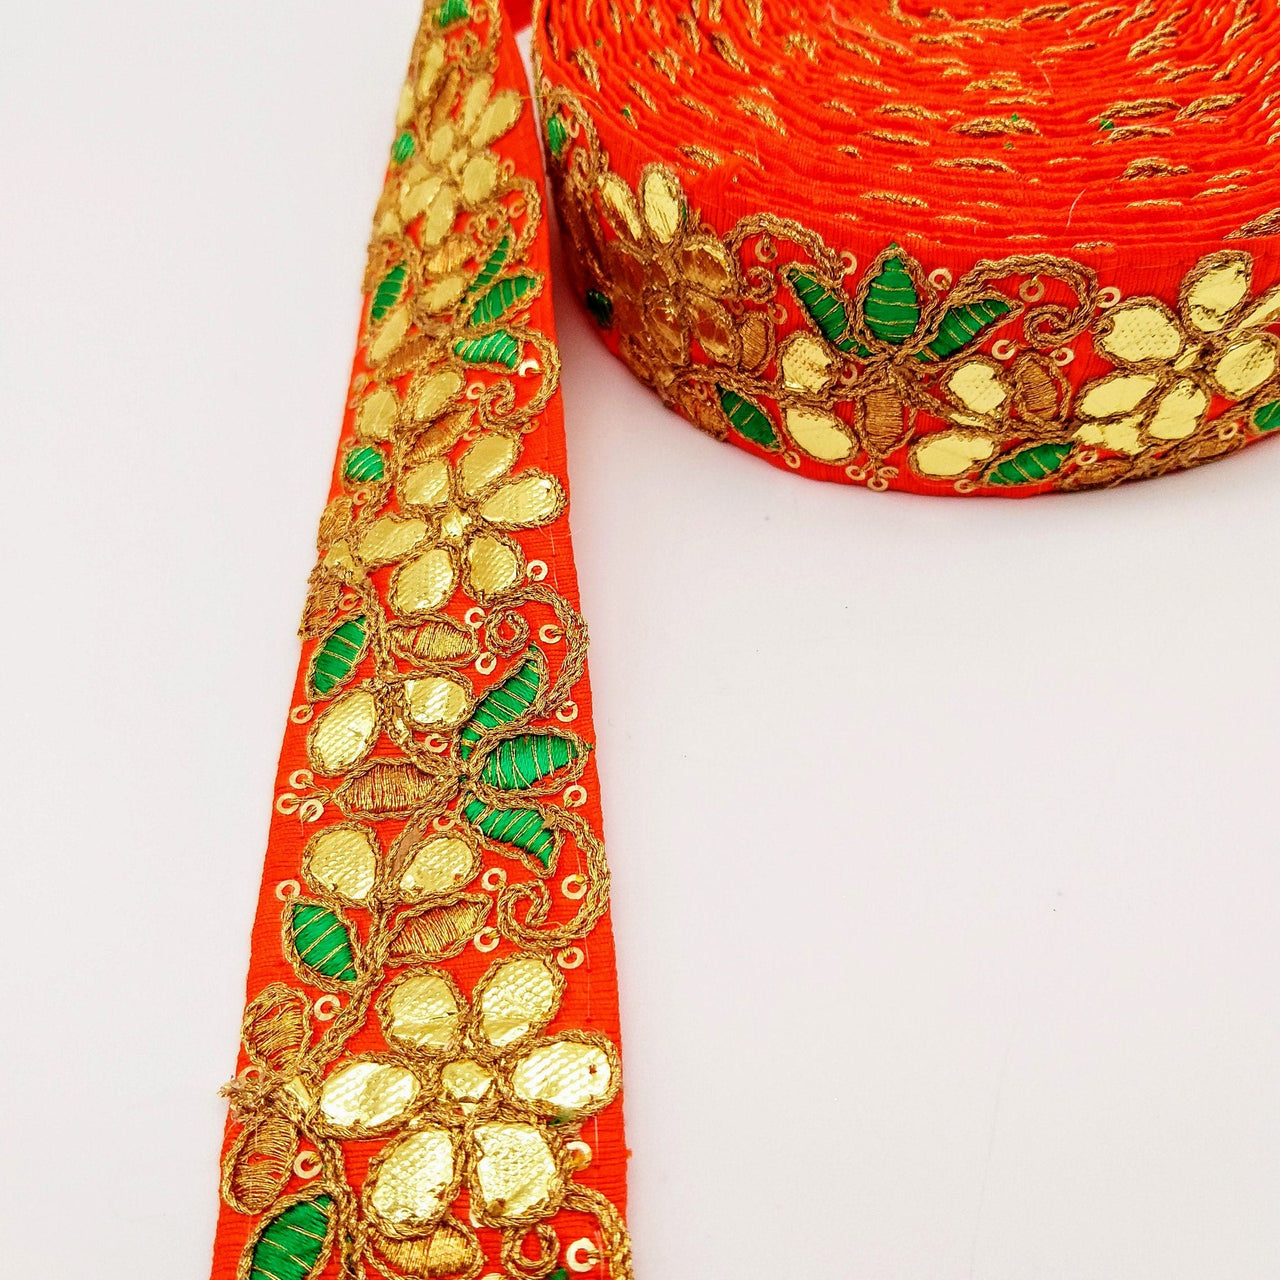 Orange Fabric Trim In Green & Gold Floral Embroidery, Gota Patti Trim, Indian Flower Border